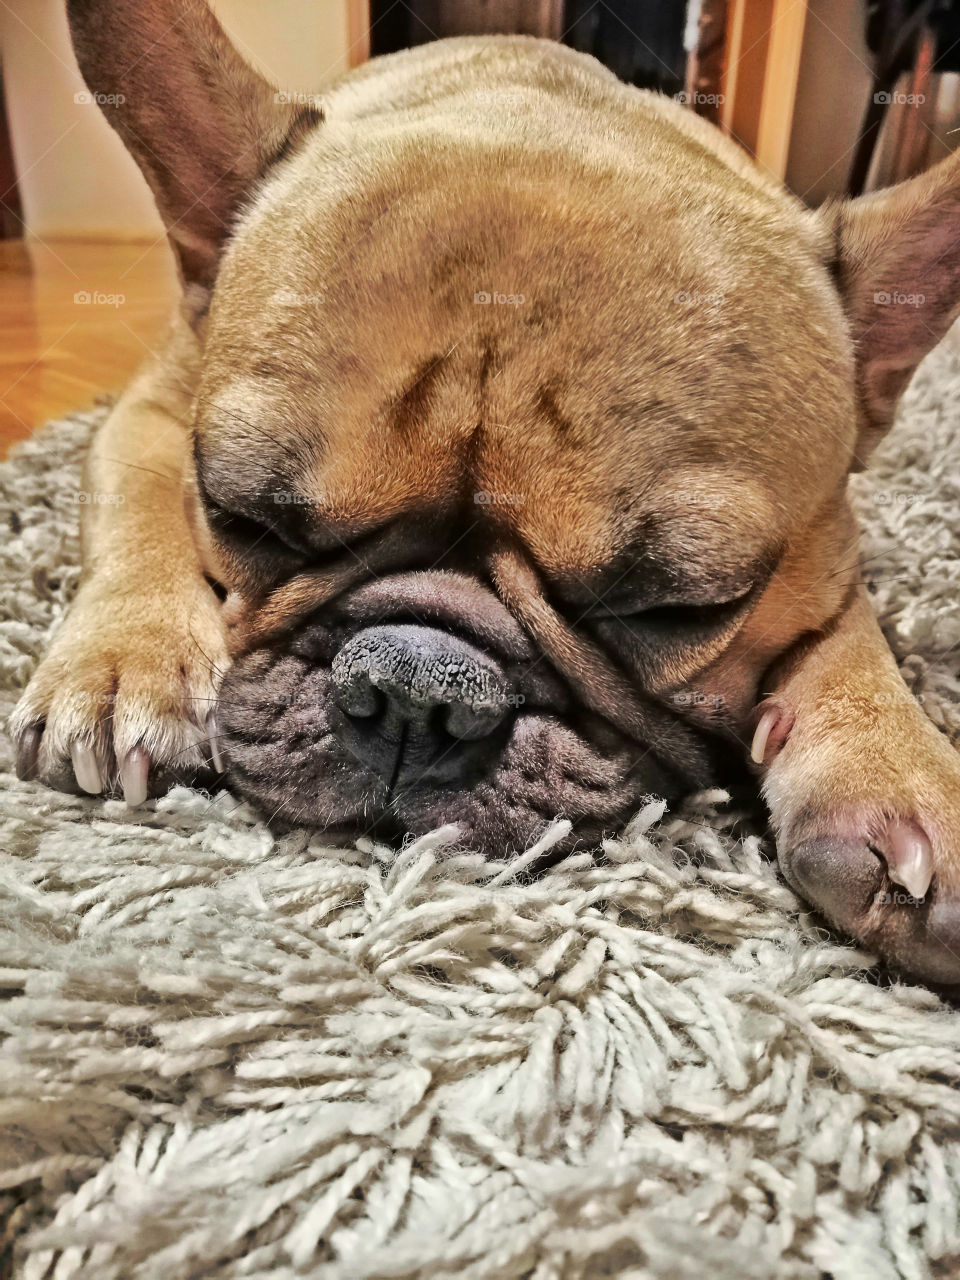 Sleepy french buldog on the carpet.